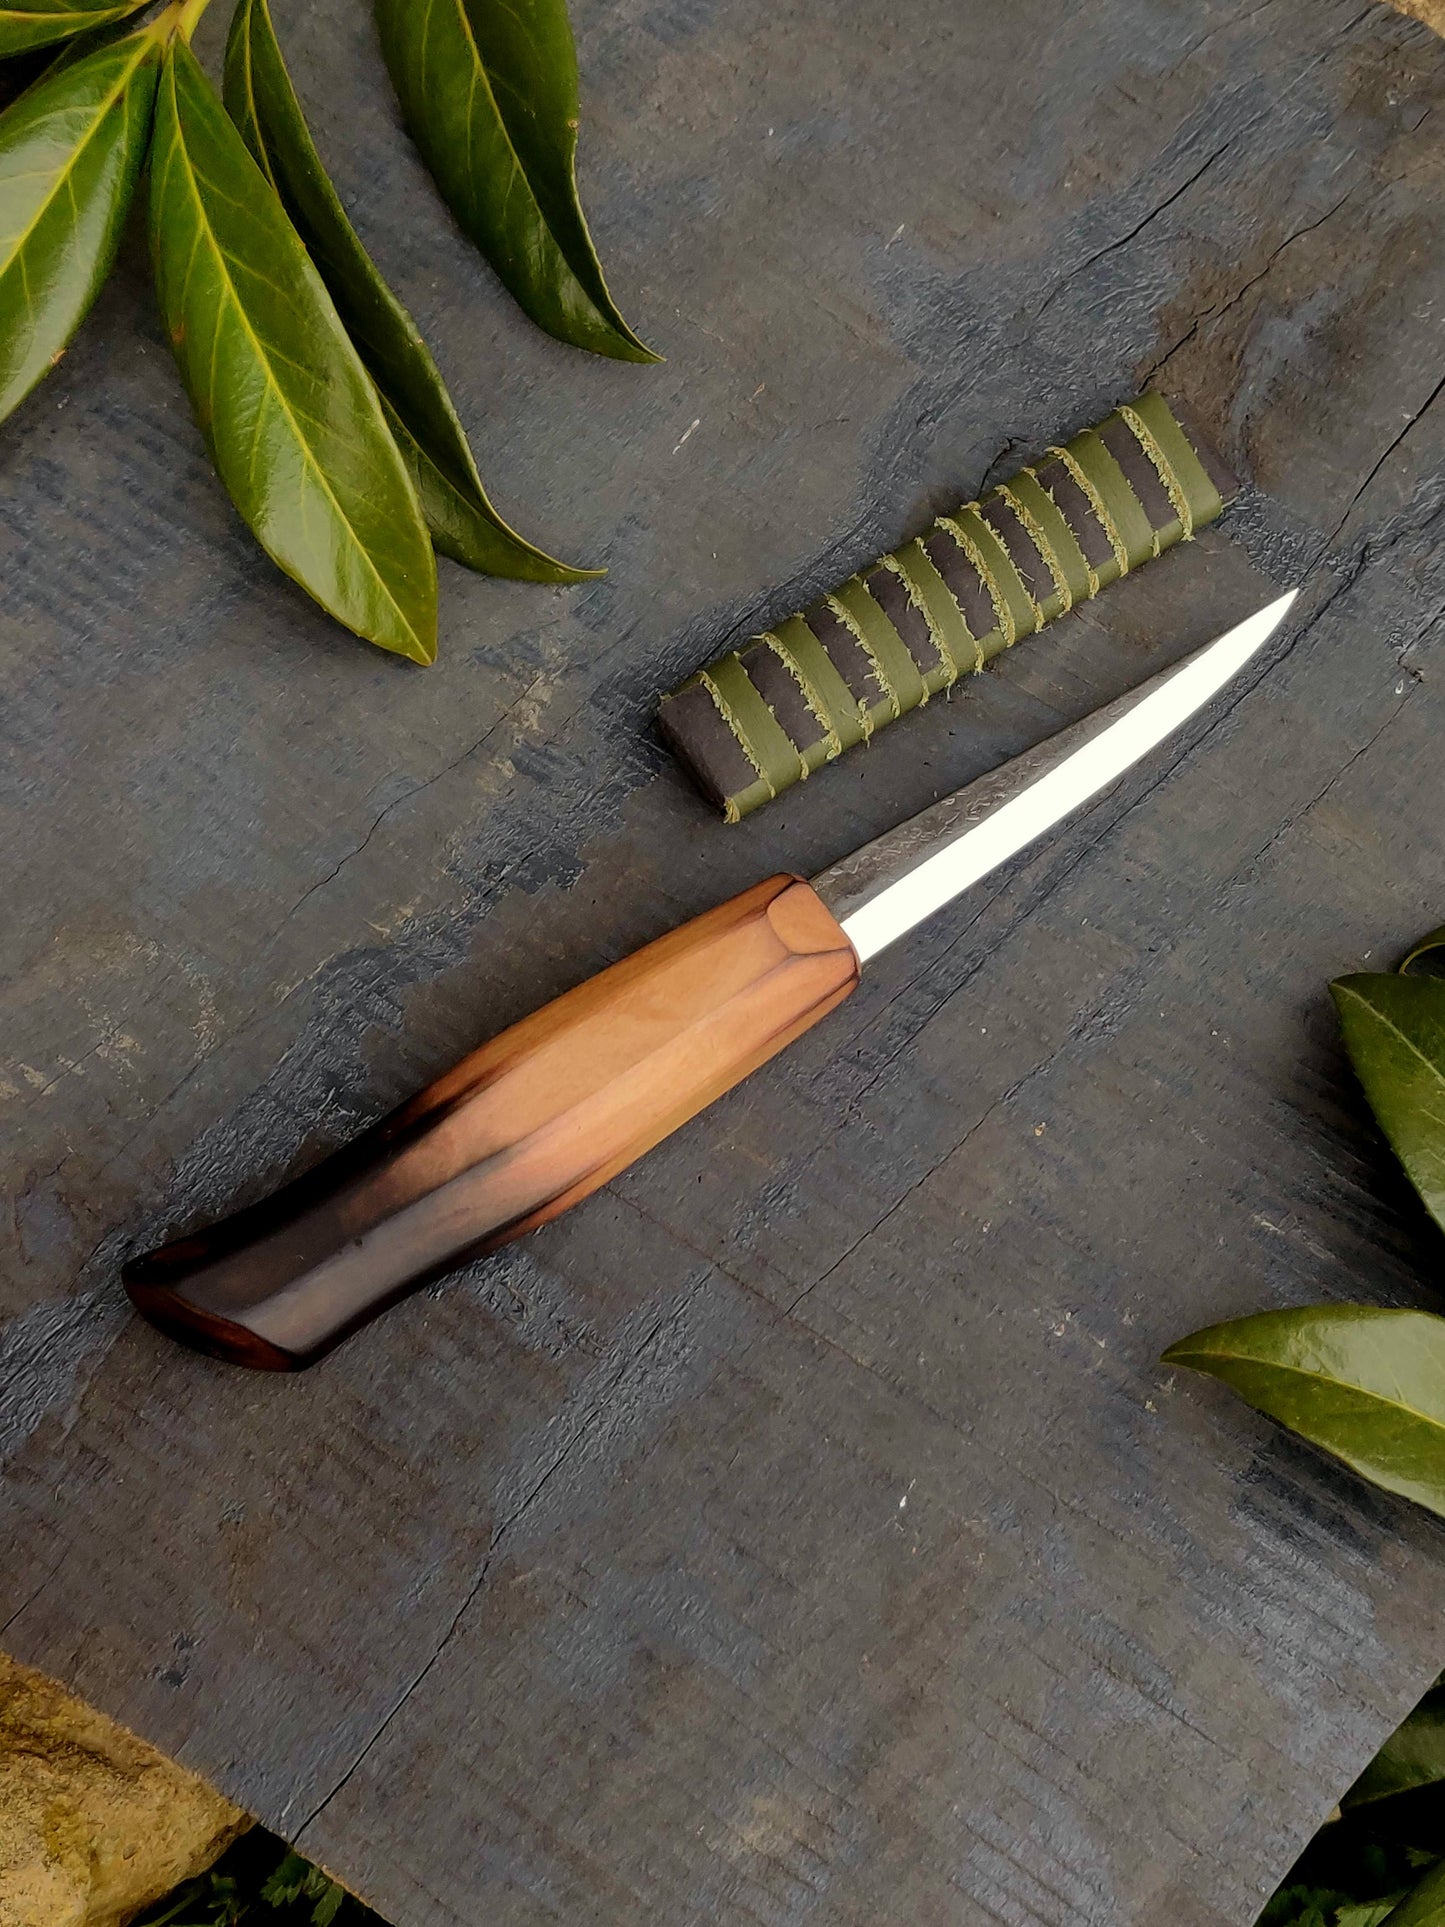 100mm Woodcarving knife, whittling knife